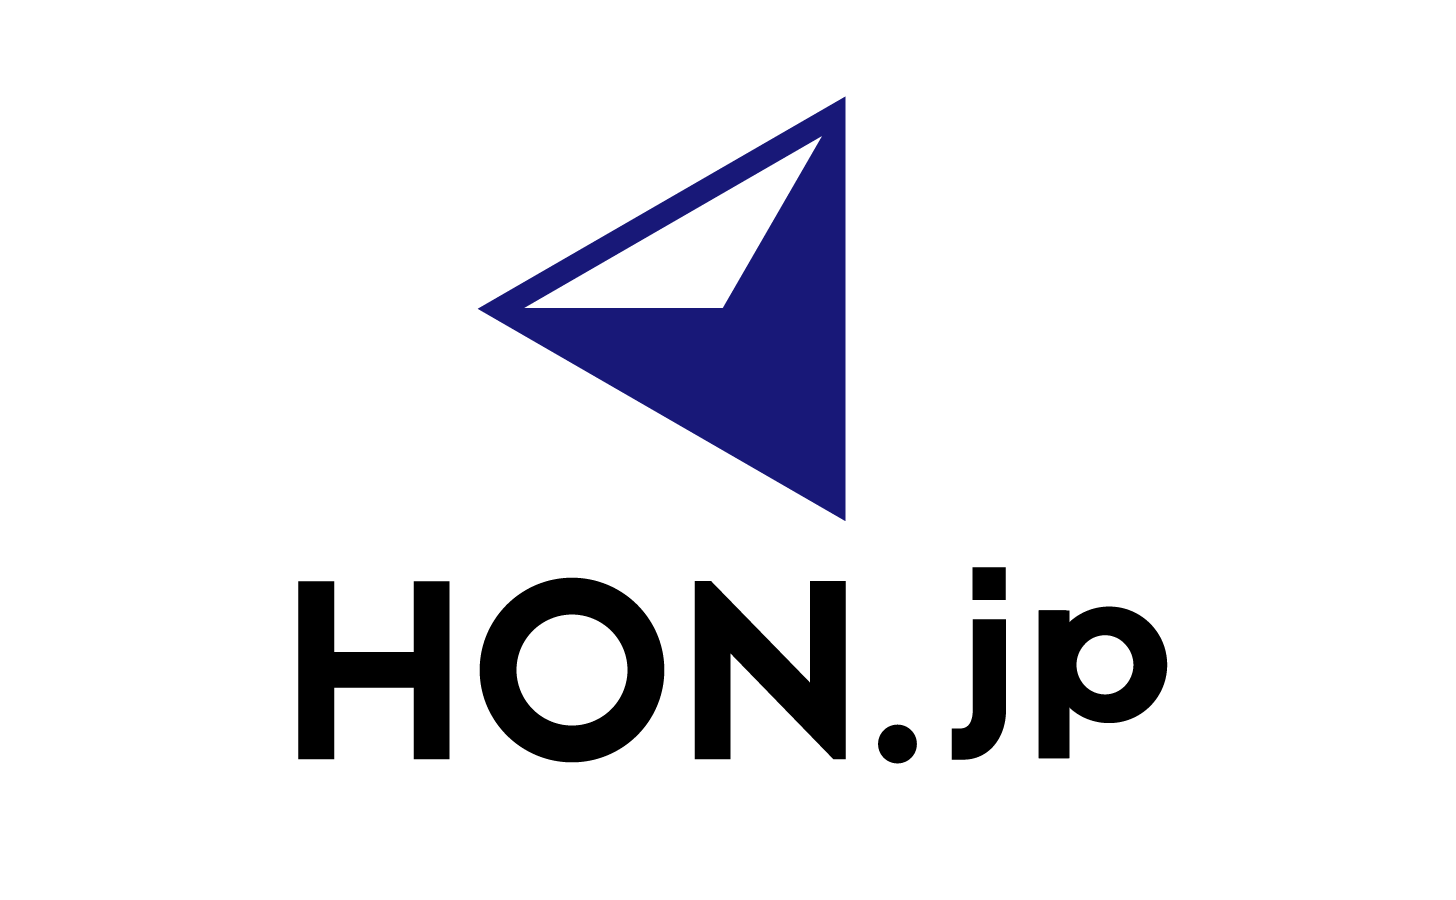 HON.jp News Blogの運営体制変更について